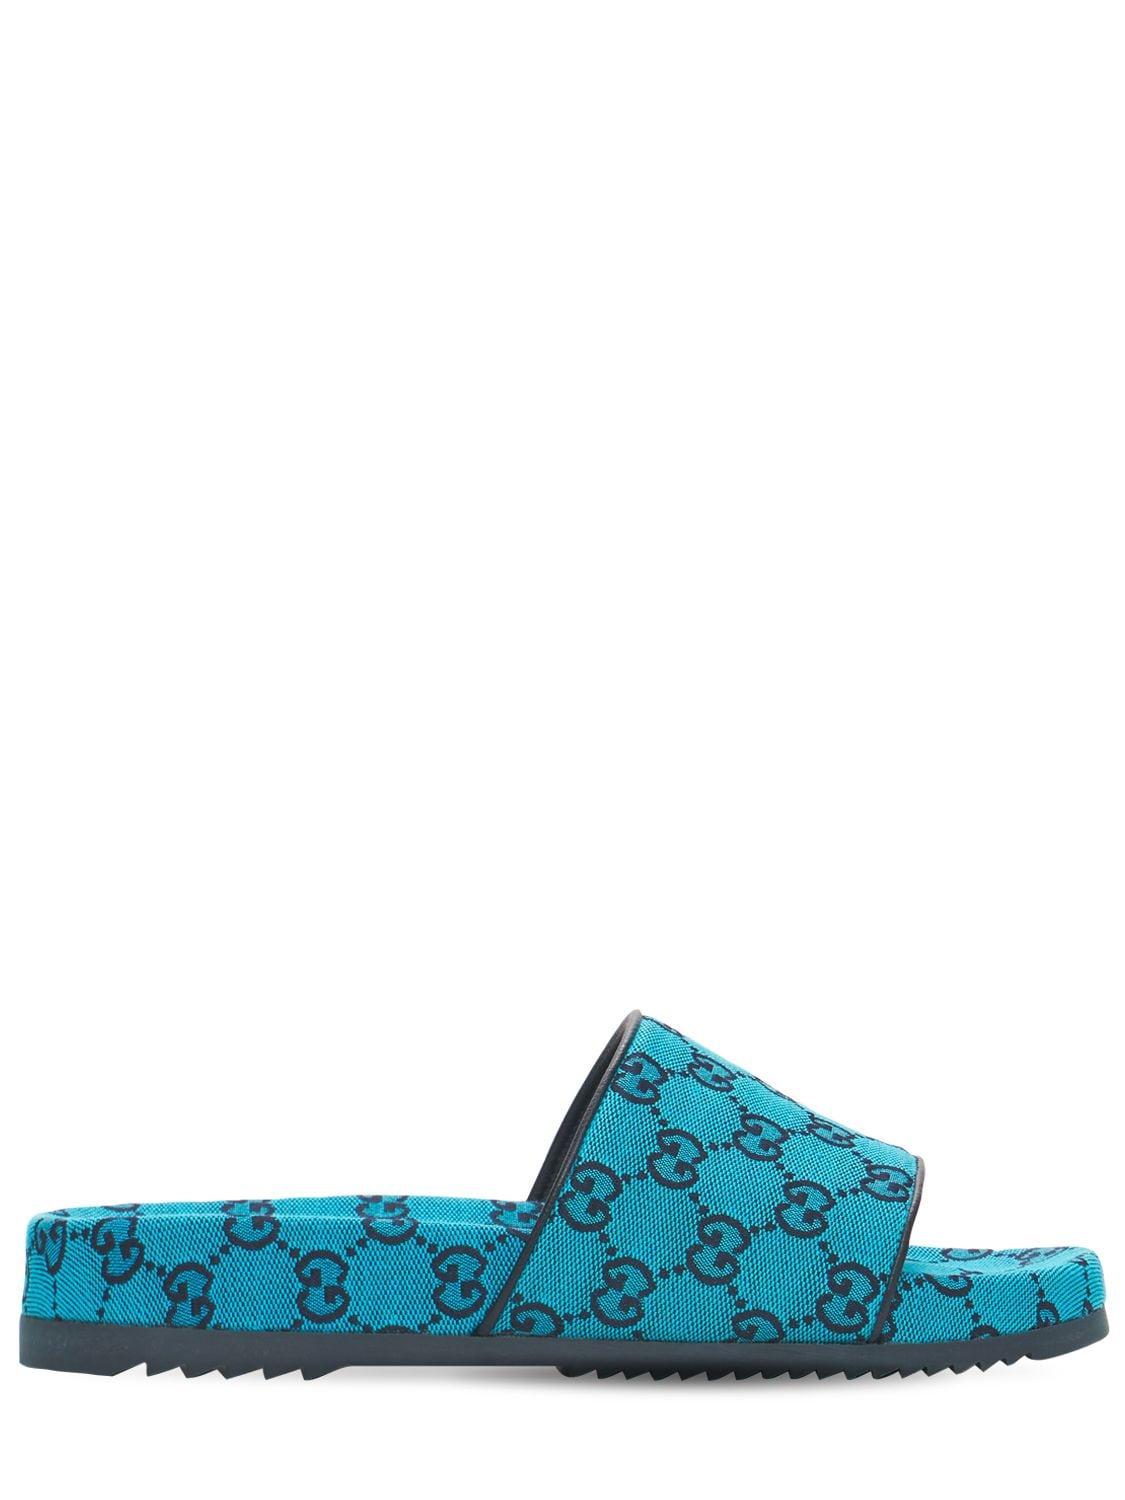 Gucci Gg Multicolor Canvas Slide Sandals in Light Blue (Blue) for 